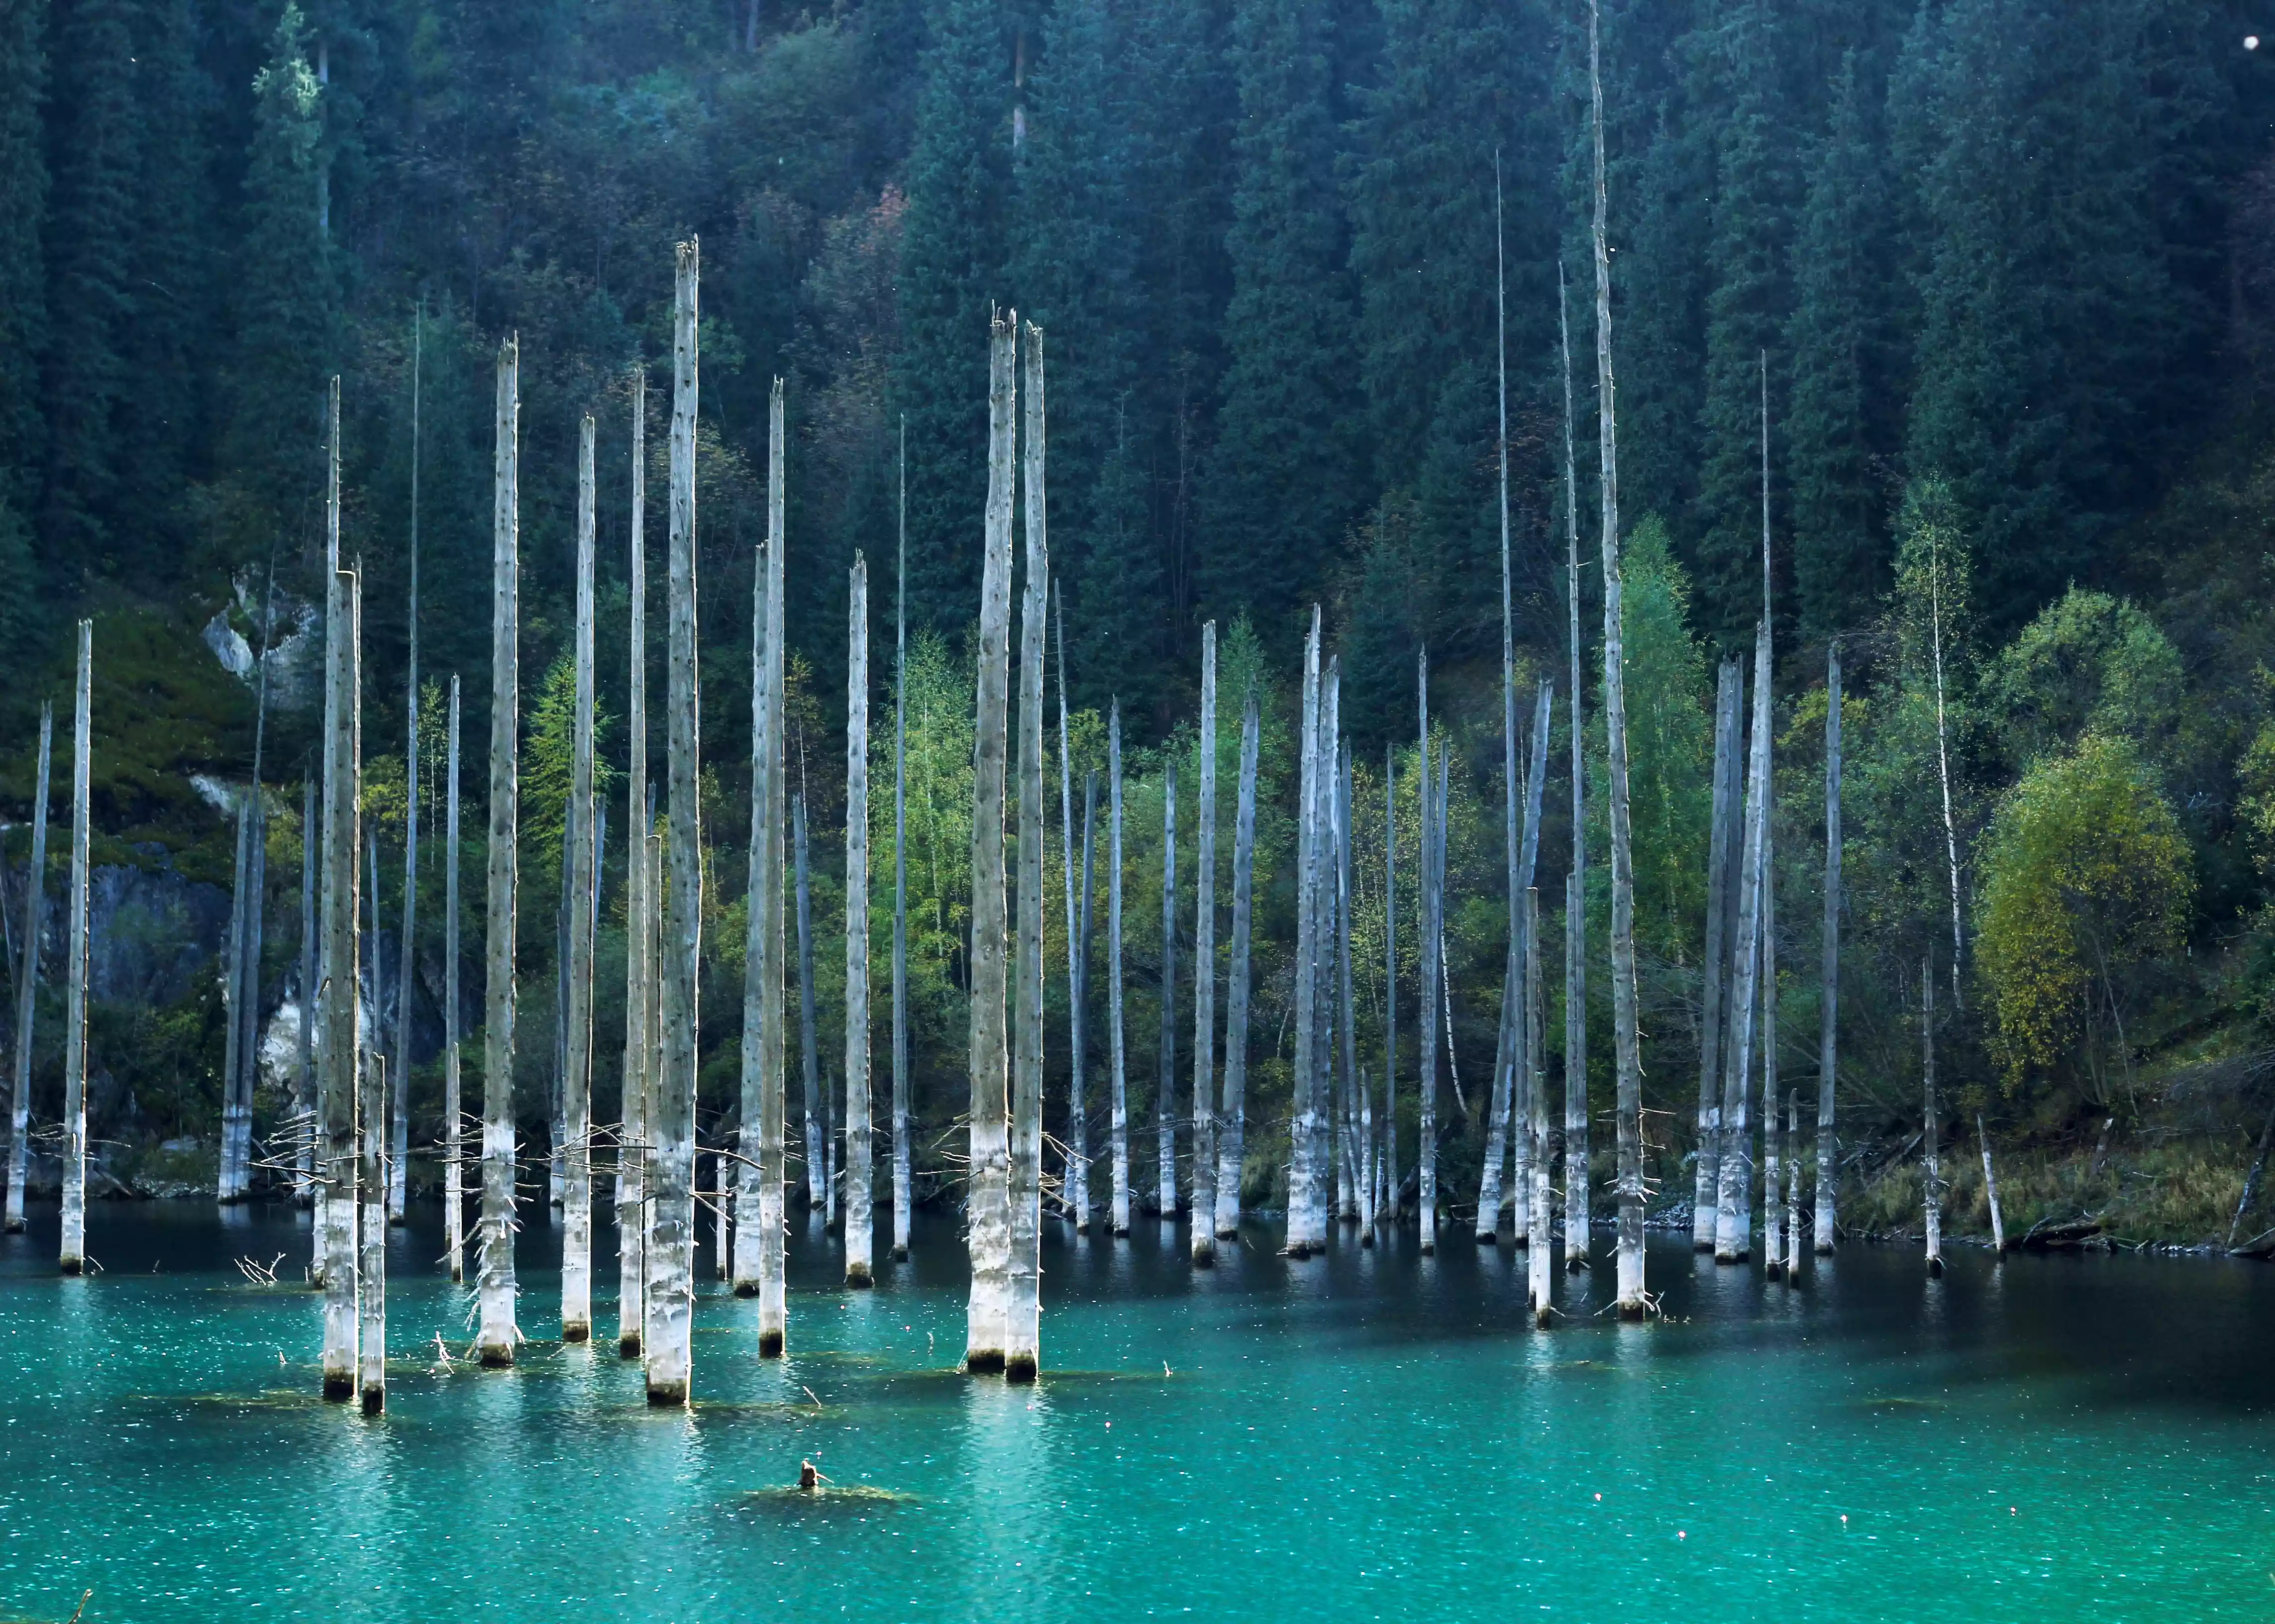 Sunken birch trees in the vividly blue Kaindy Lake